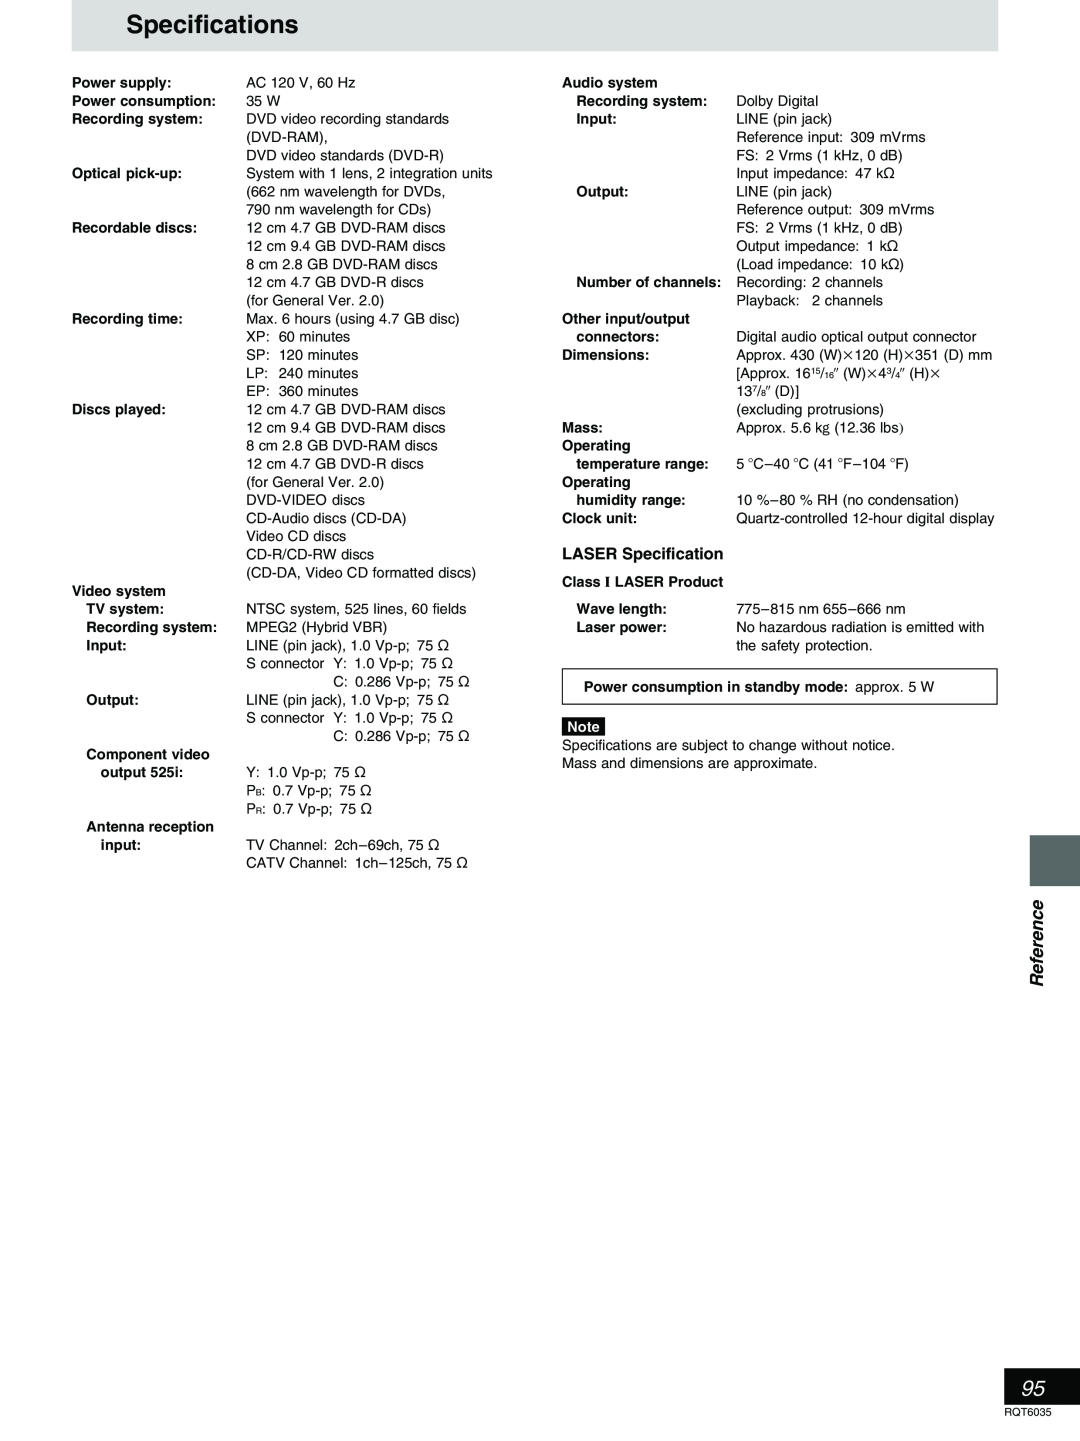 Panasonic DMR-E20 warranty Specifications, Reference, LASER Specification 